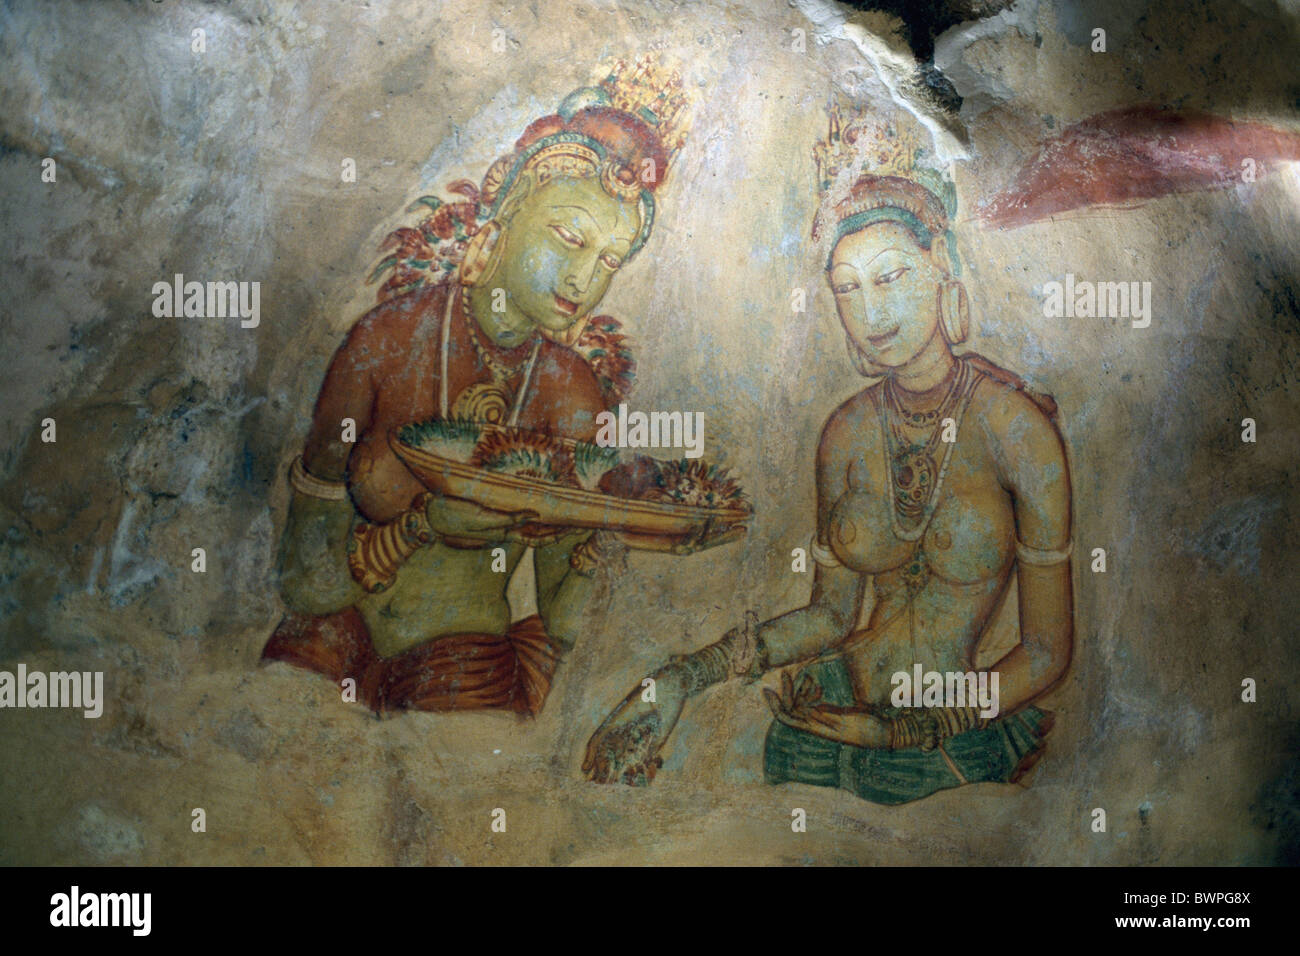 Sri Lanka Asia Sigiriya Lion rock mountain cave painting fresco culture historic historical travel Schinde Stock Photo